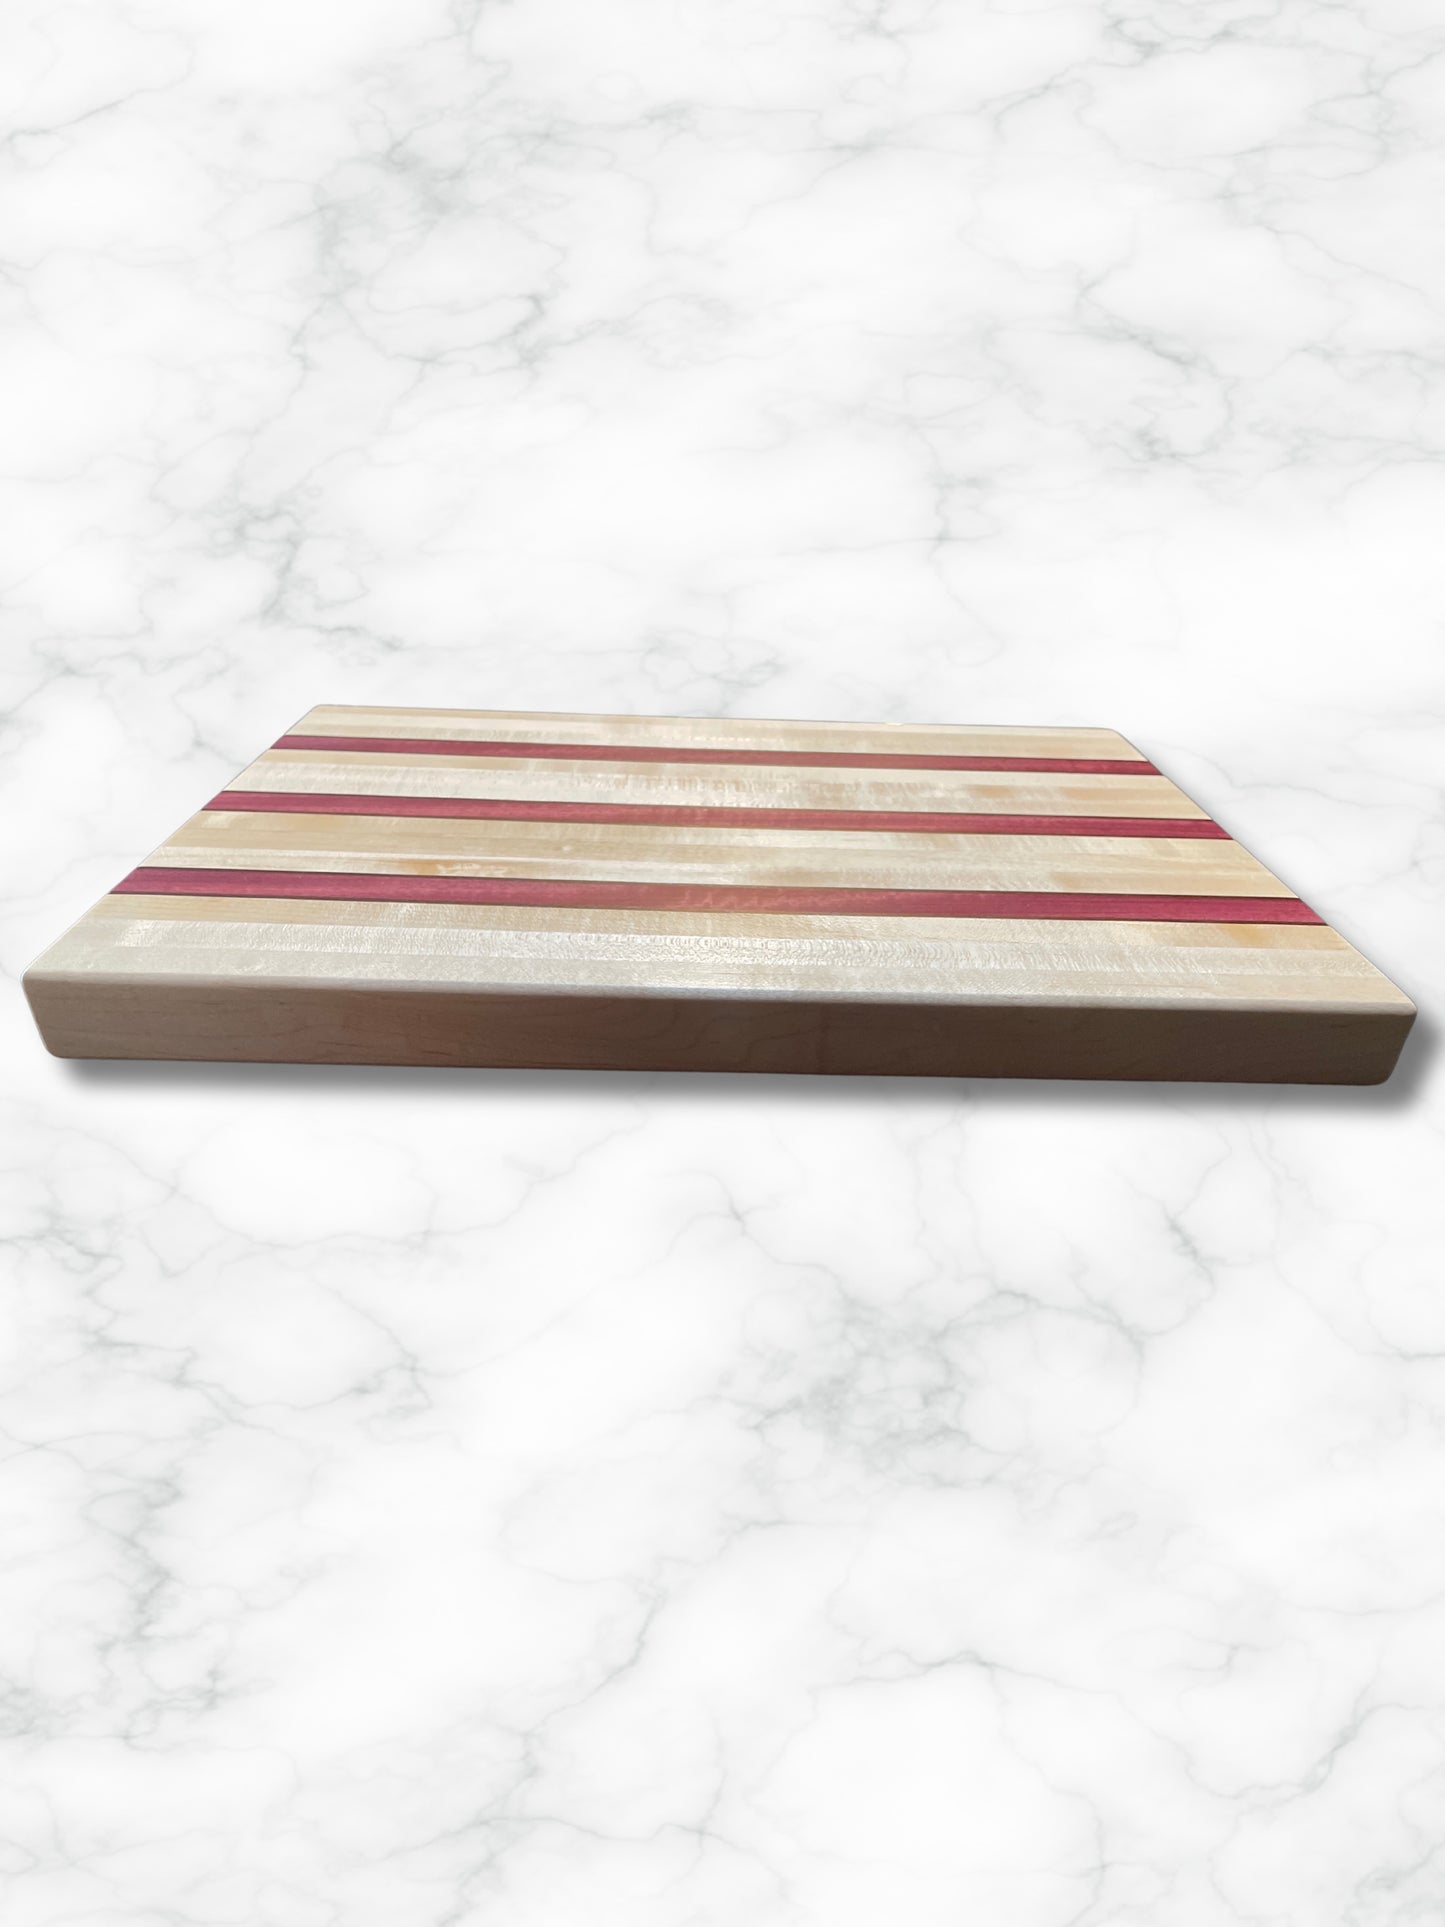 custom handmade edge grain maple purpleheart walnut wood cutting board, front view